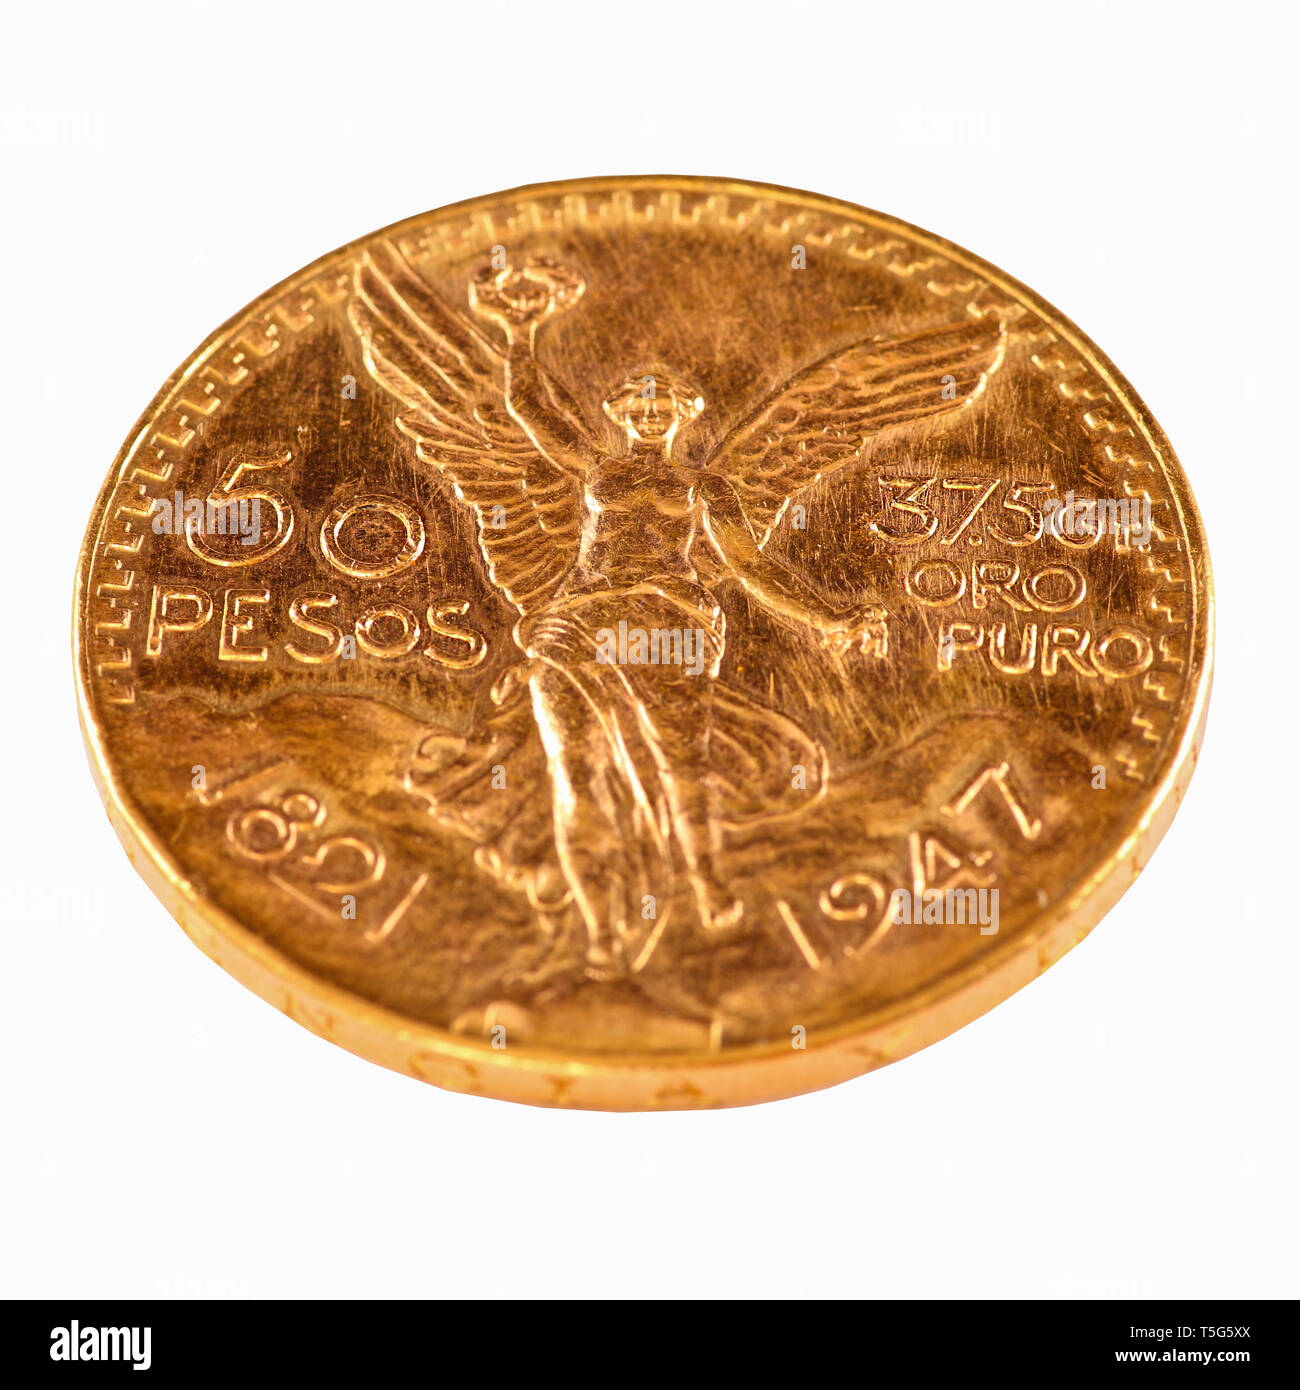 Copper Mexican Coins Cuauhtemoc 2018 